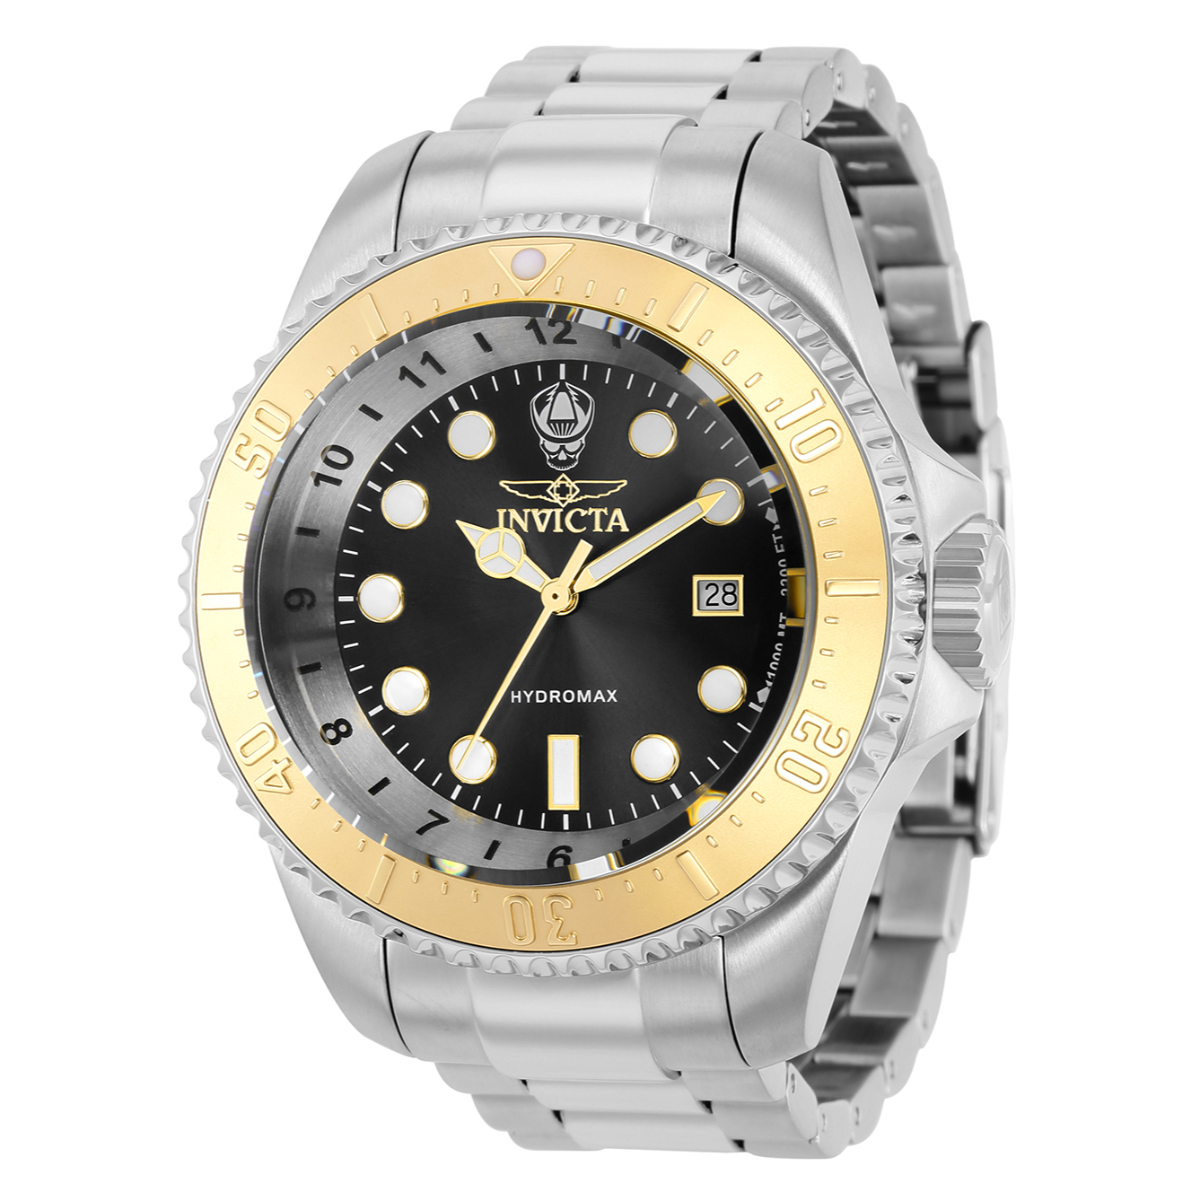 INVICTA 腕時計 HYDROMAX 40462 クォーツ 防水1000ｍ - 時計